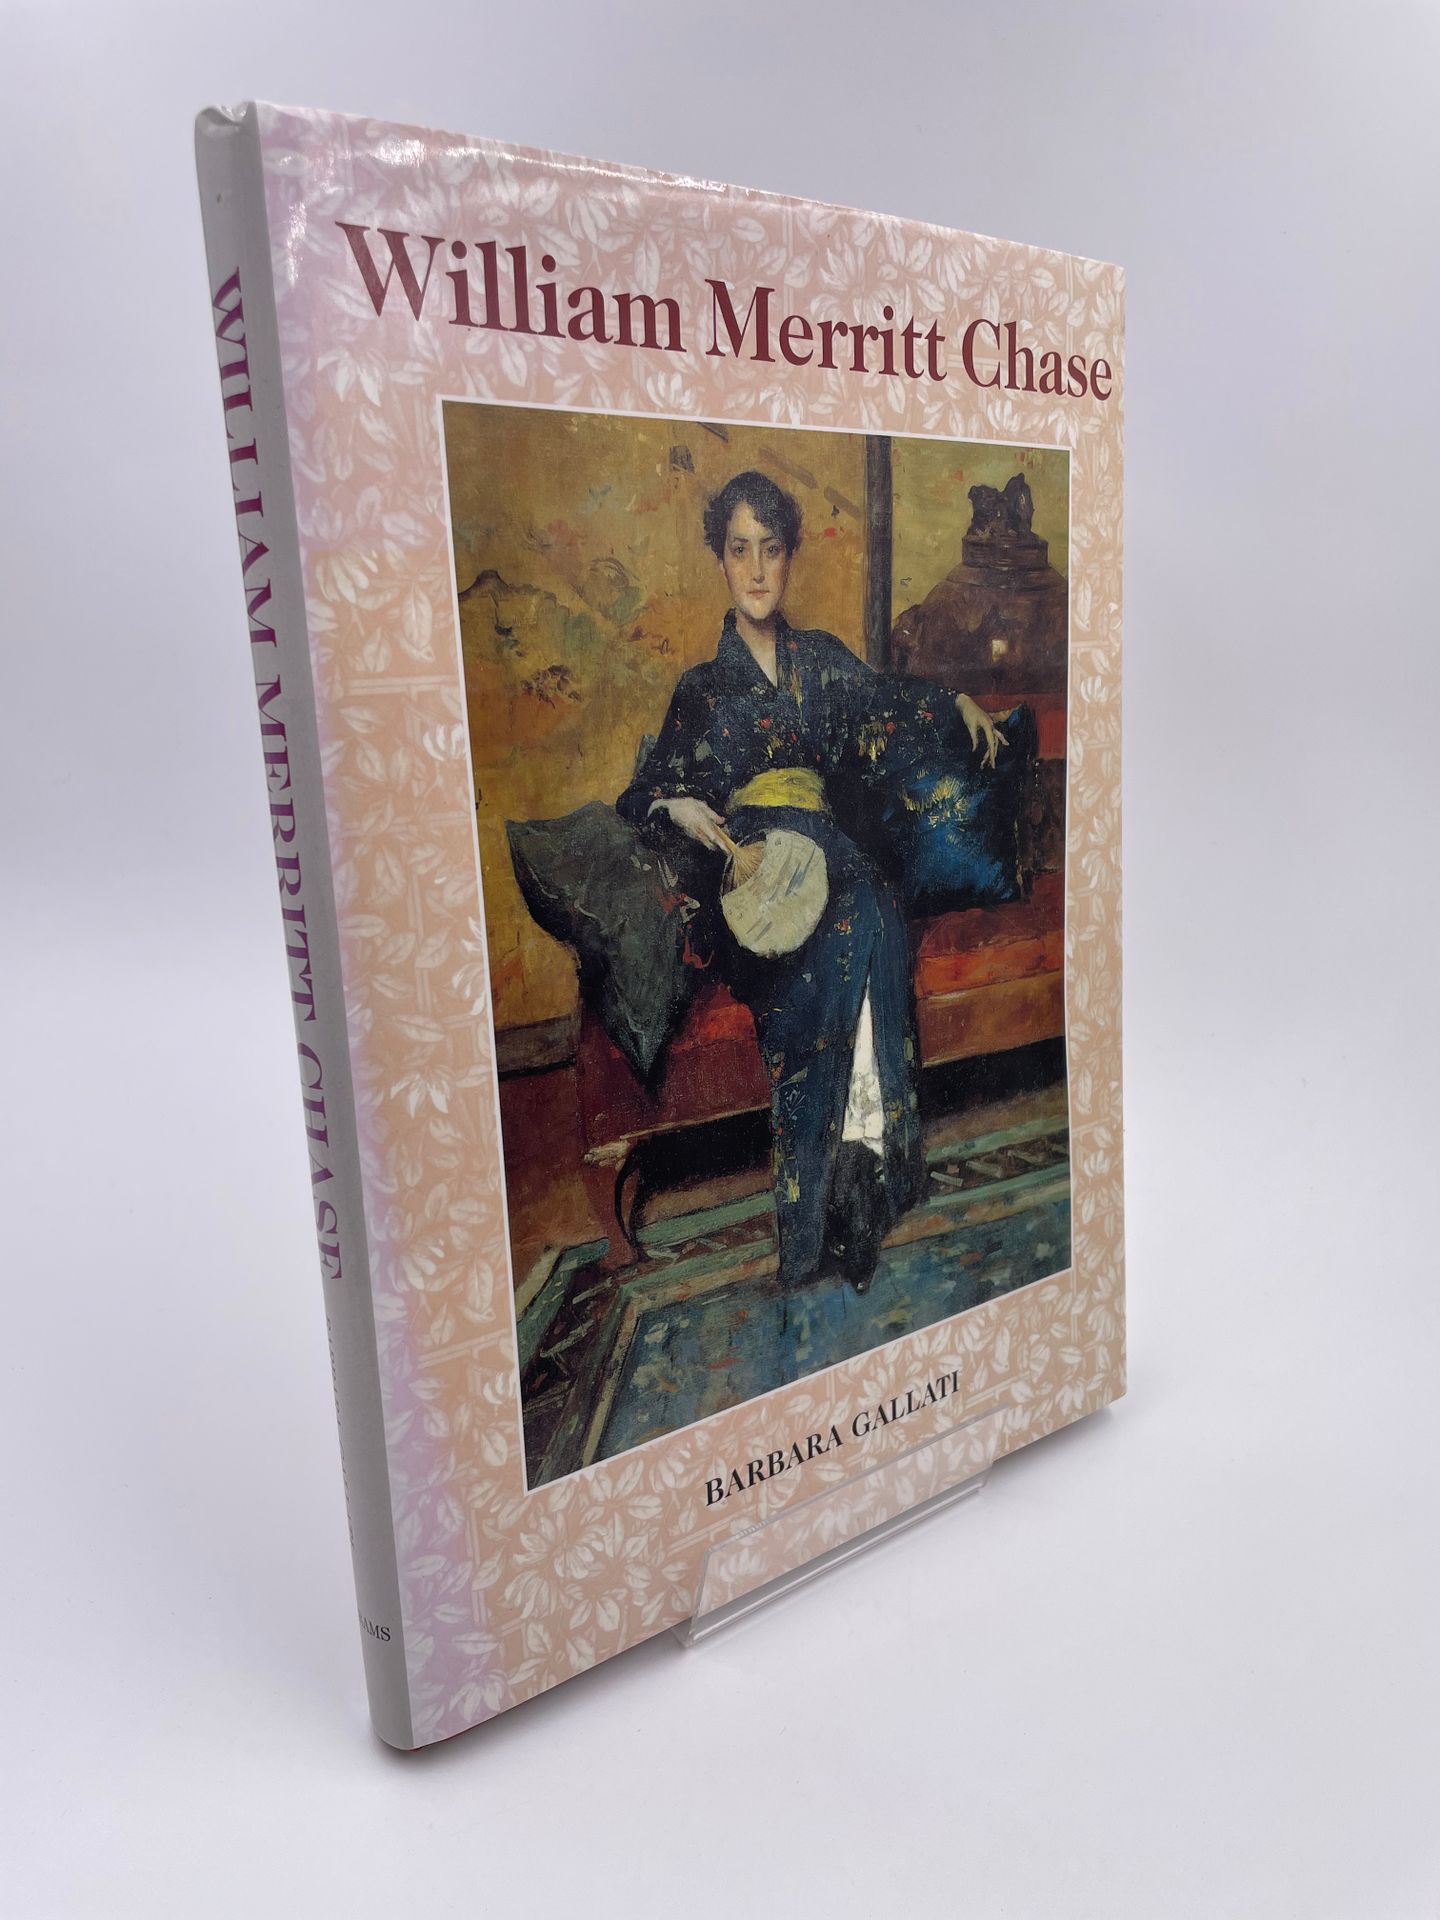 Null 1 Volume : "William Merritt Chase", Barbara Dayer Gallati, Ed. Harry N. Abr&hellip;